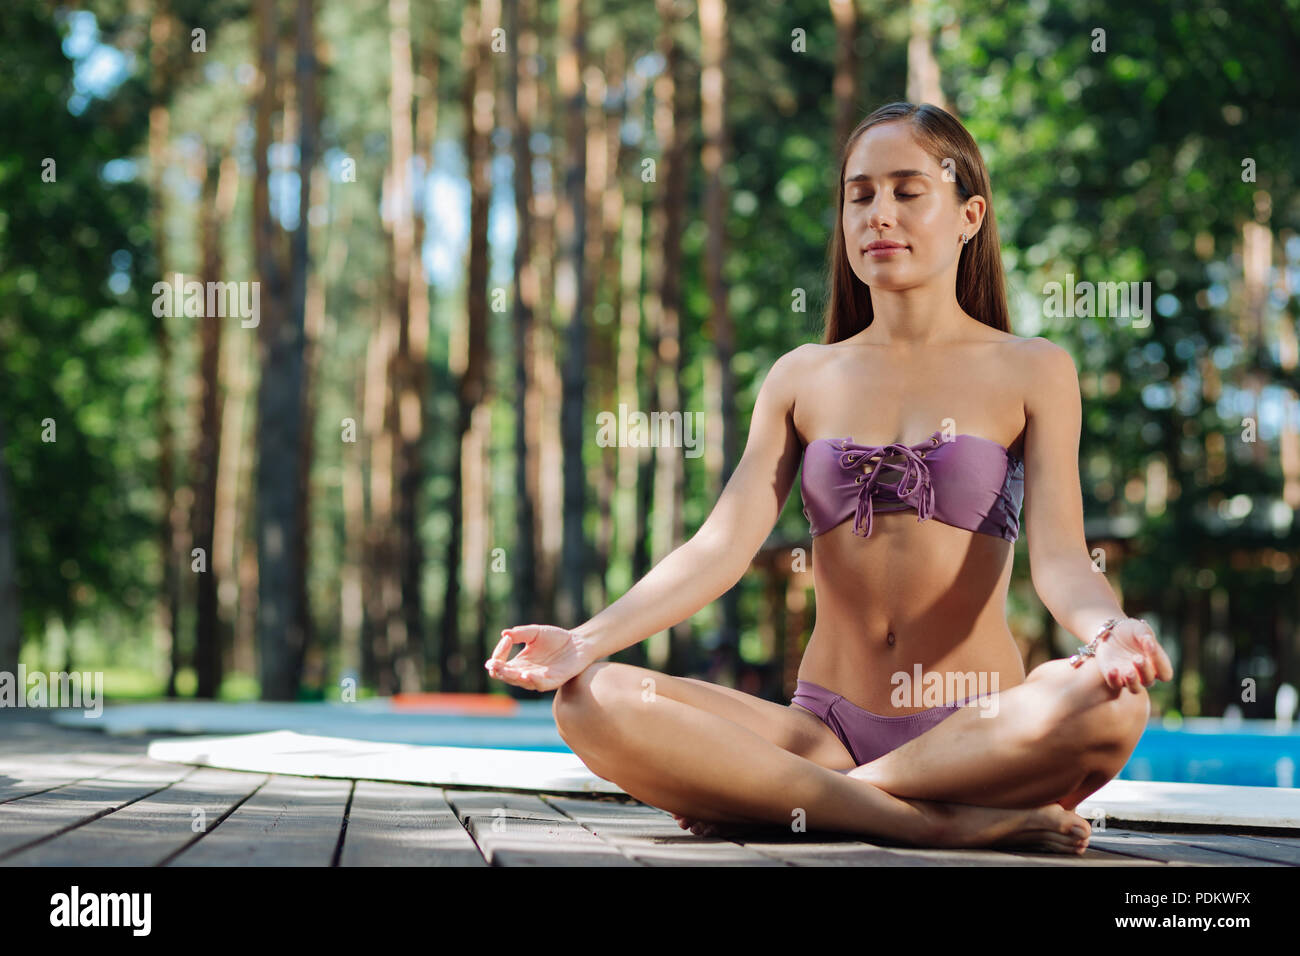 Dark-haired woman doing yoga outdoors near pool Stock Photo